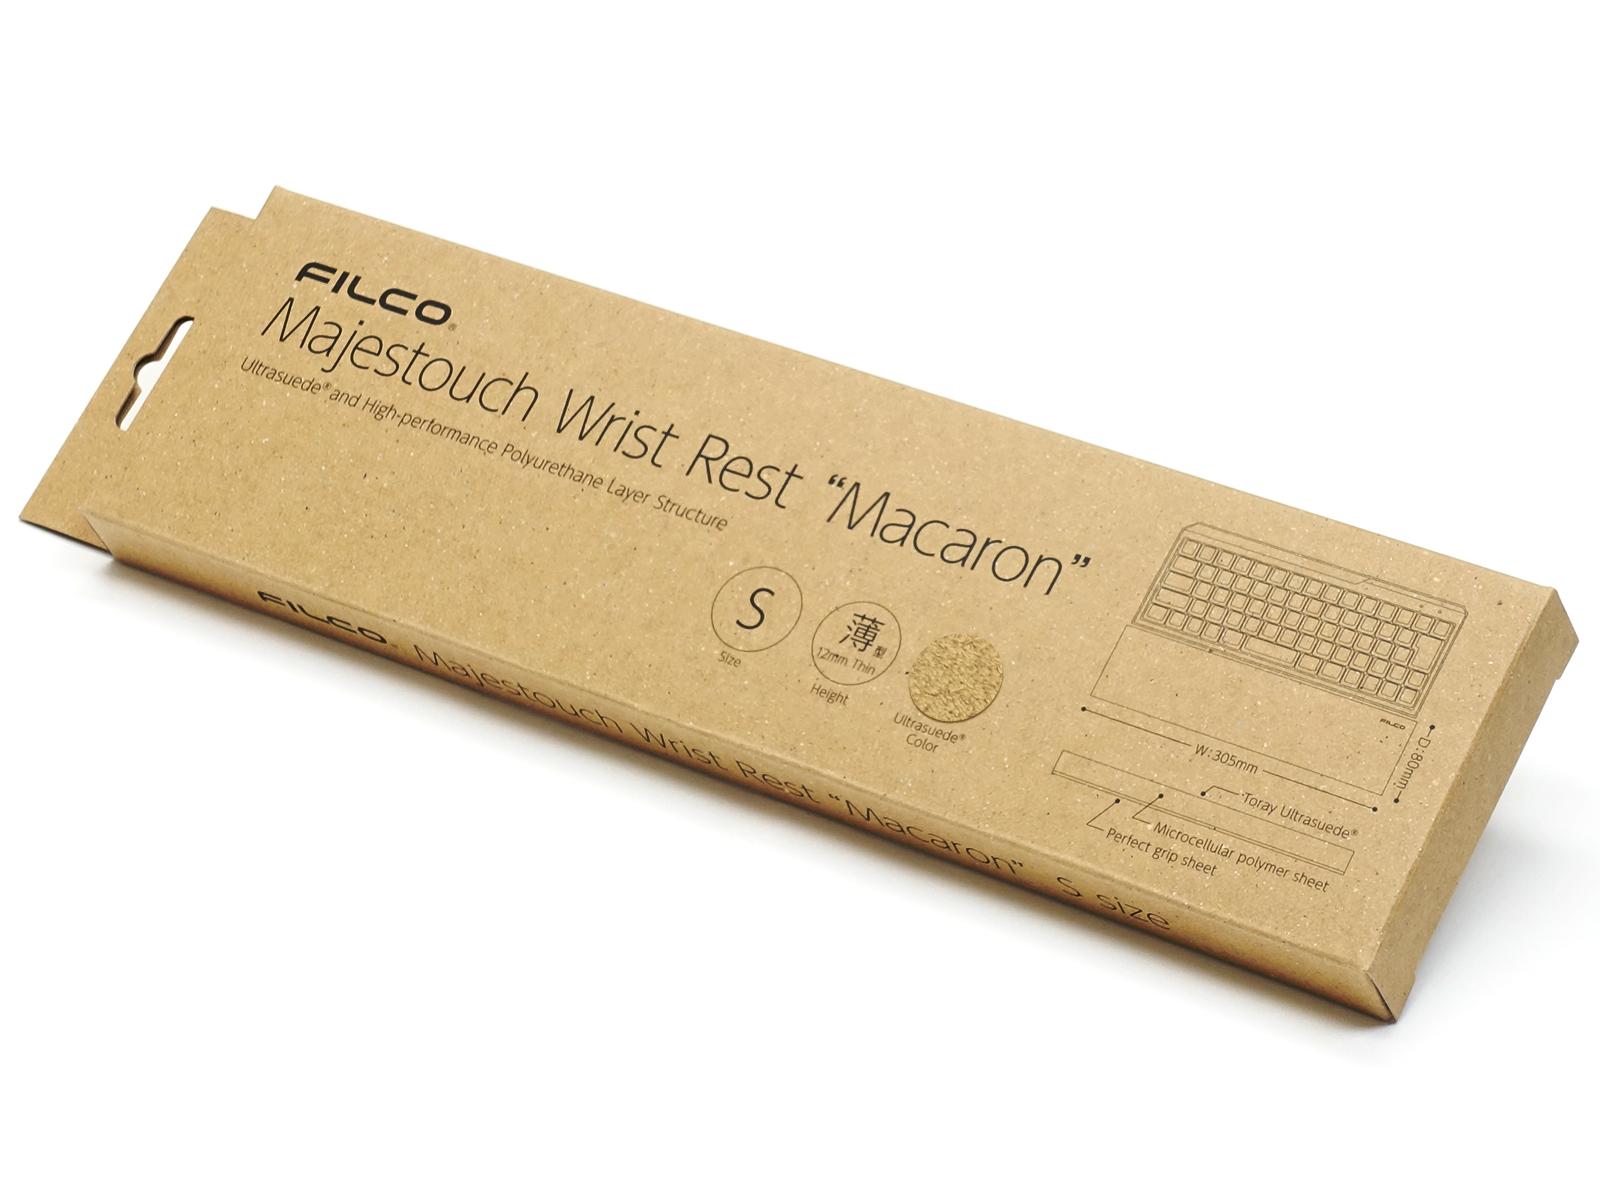 FILCO Majestouch Macaron Wrist Rest Cinnamon Small (12mm) MK6YCJWMMF |38298|